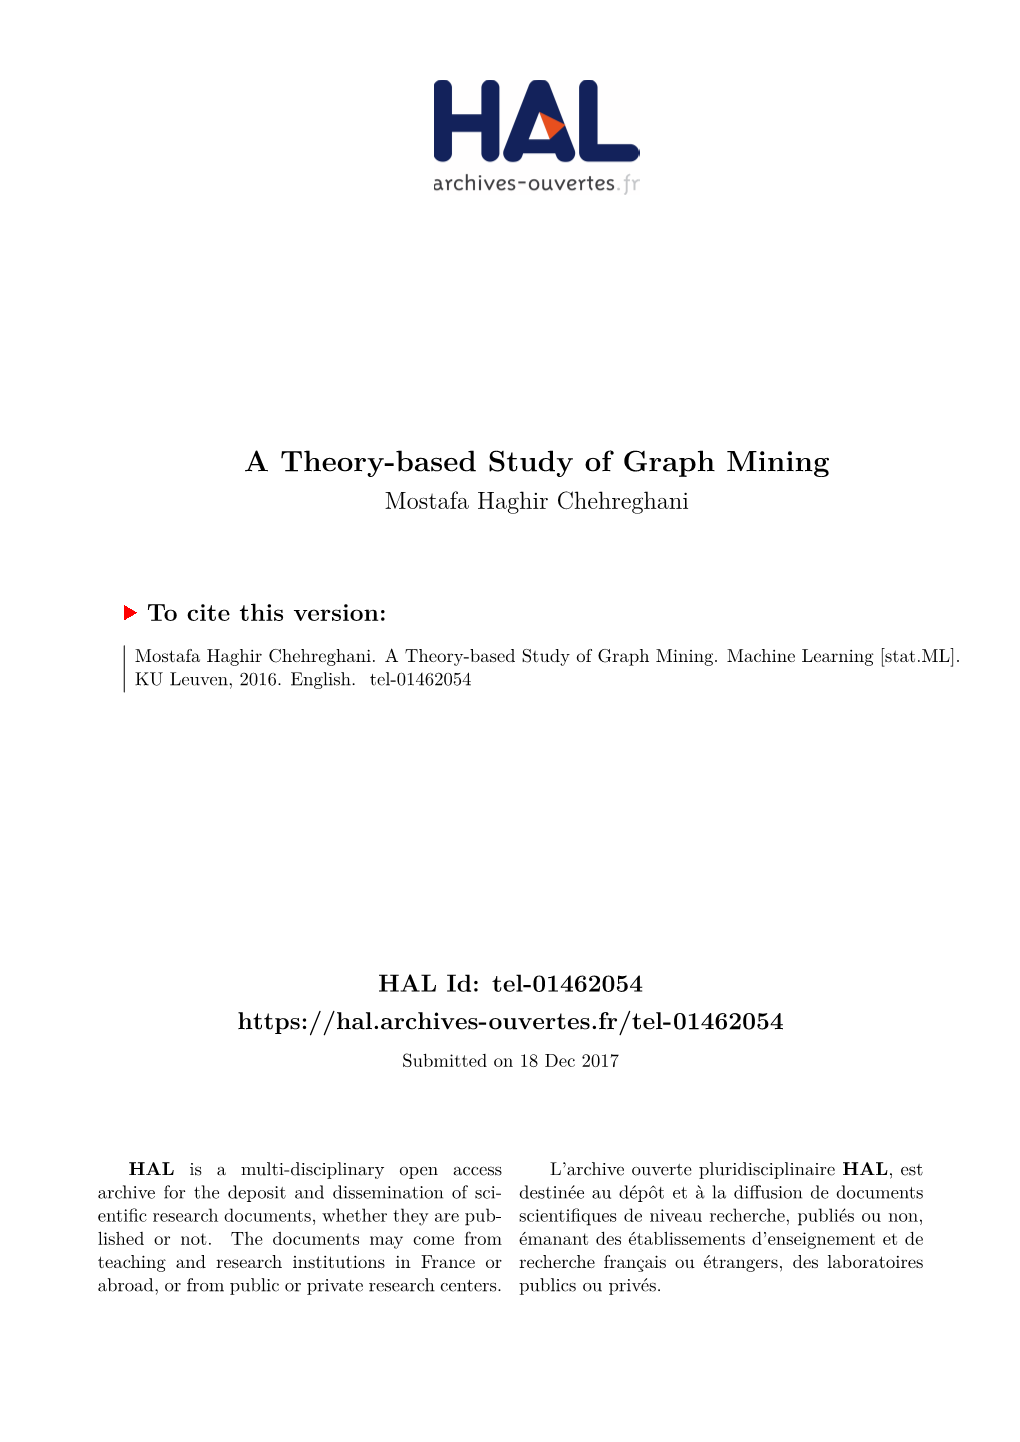 A Theory-Based Study of Graph Mining Mostafa Haghir Chehreghani